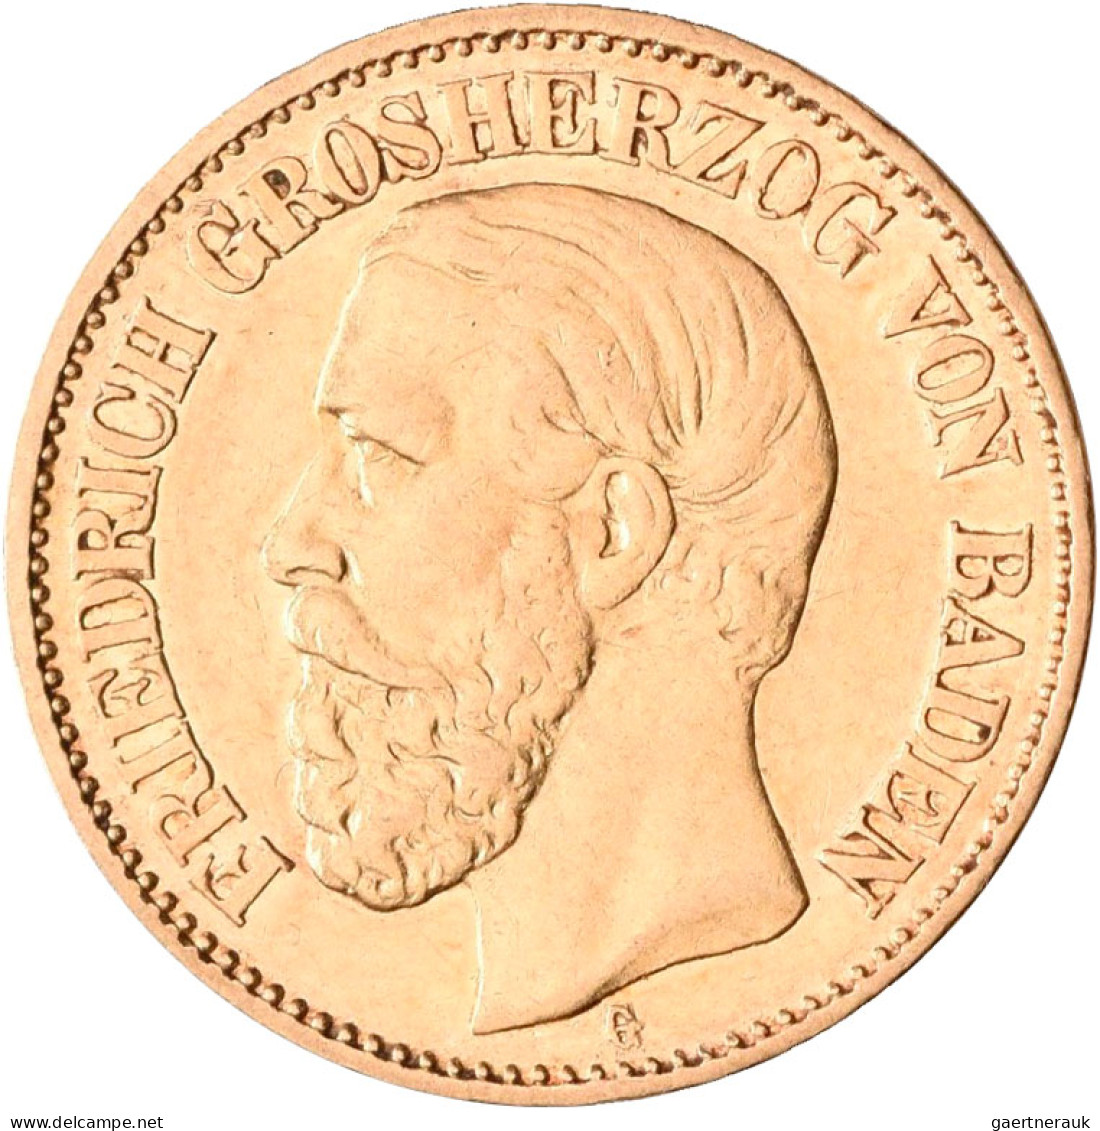 Baden - Anlagegold: Friedrich I. 1852-1907: 10 Mark 1888 G, Jäger 186, Gold 900/ - 5, 10 & 20 Mark Gold